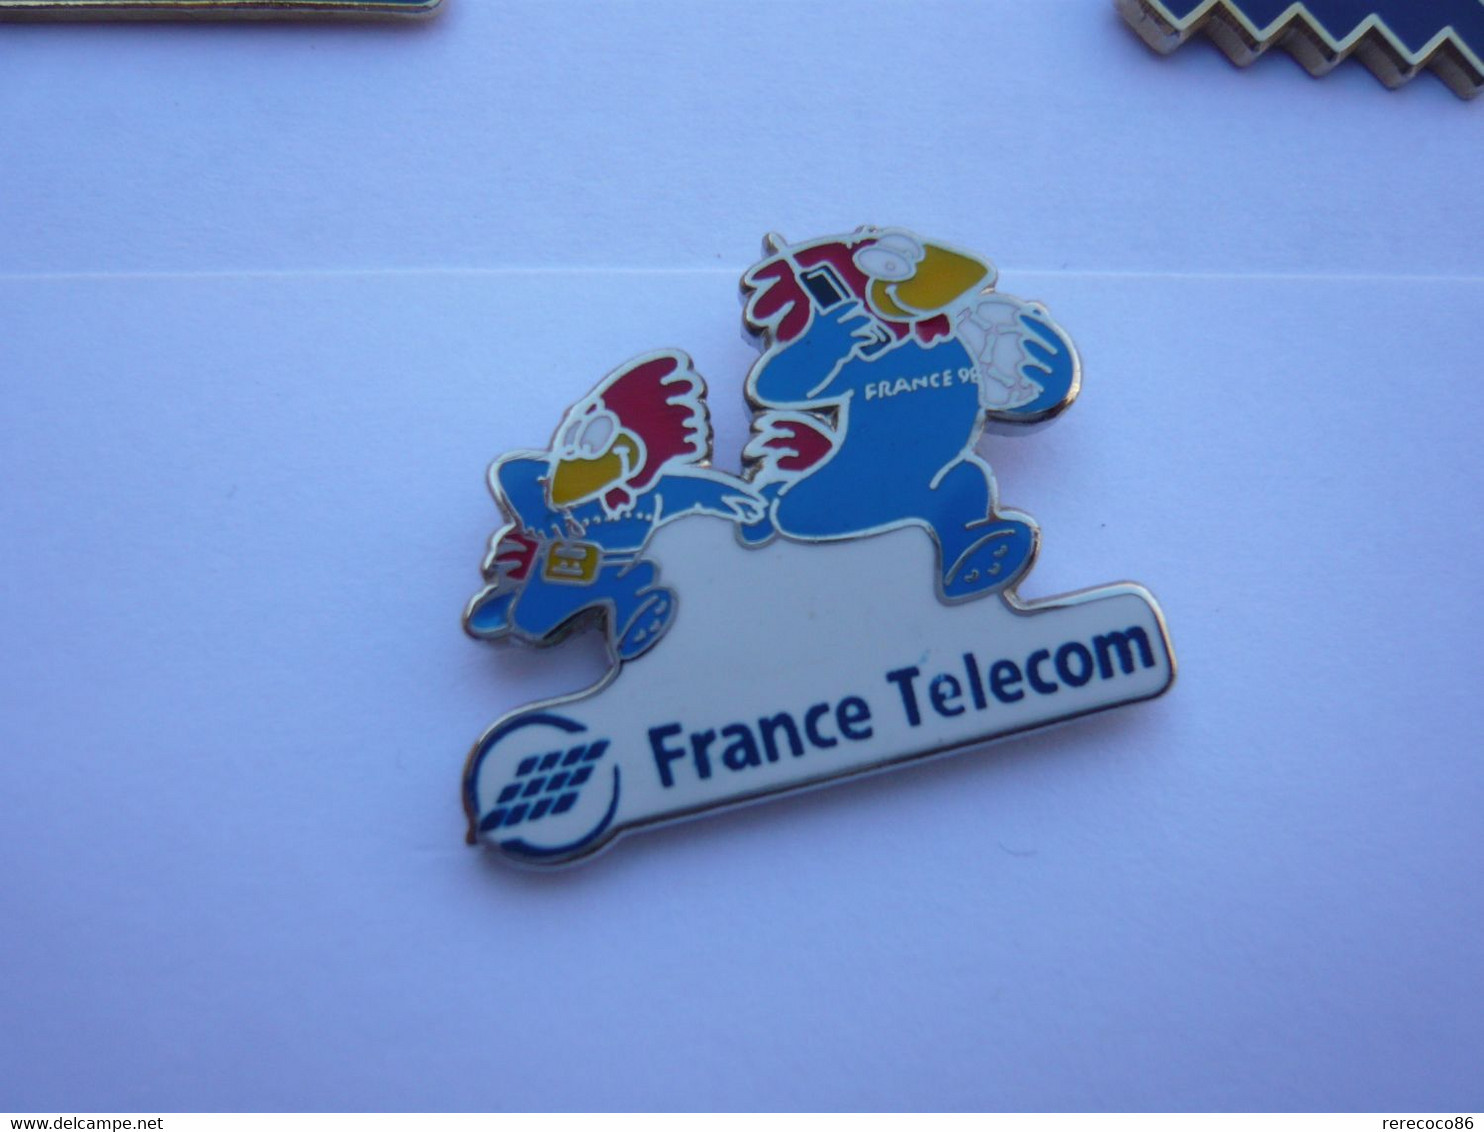 Pins FRANCE TELECOM FOOTBALL FRANCE 98 - France Telecom